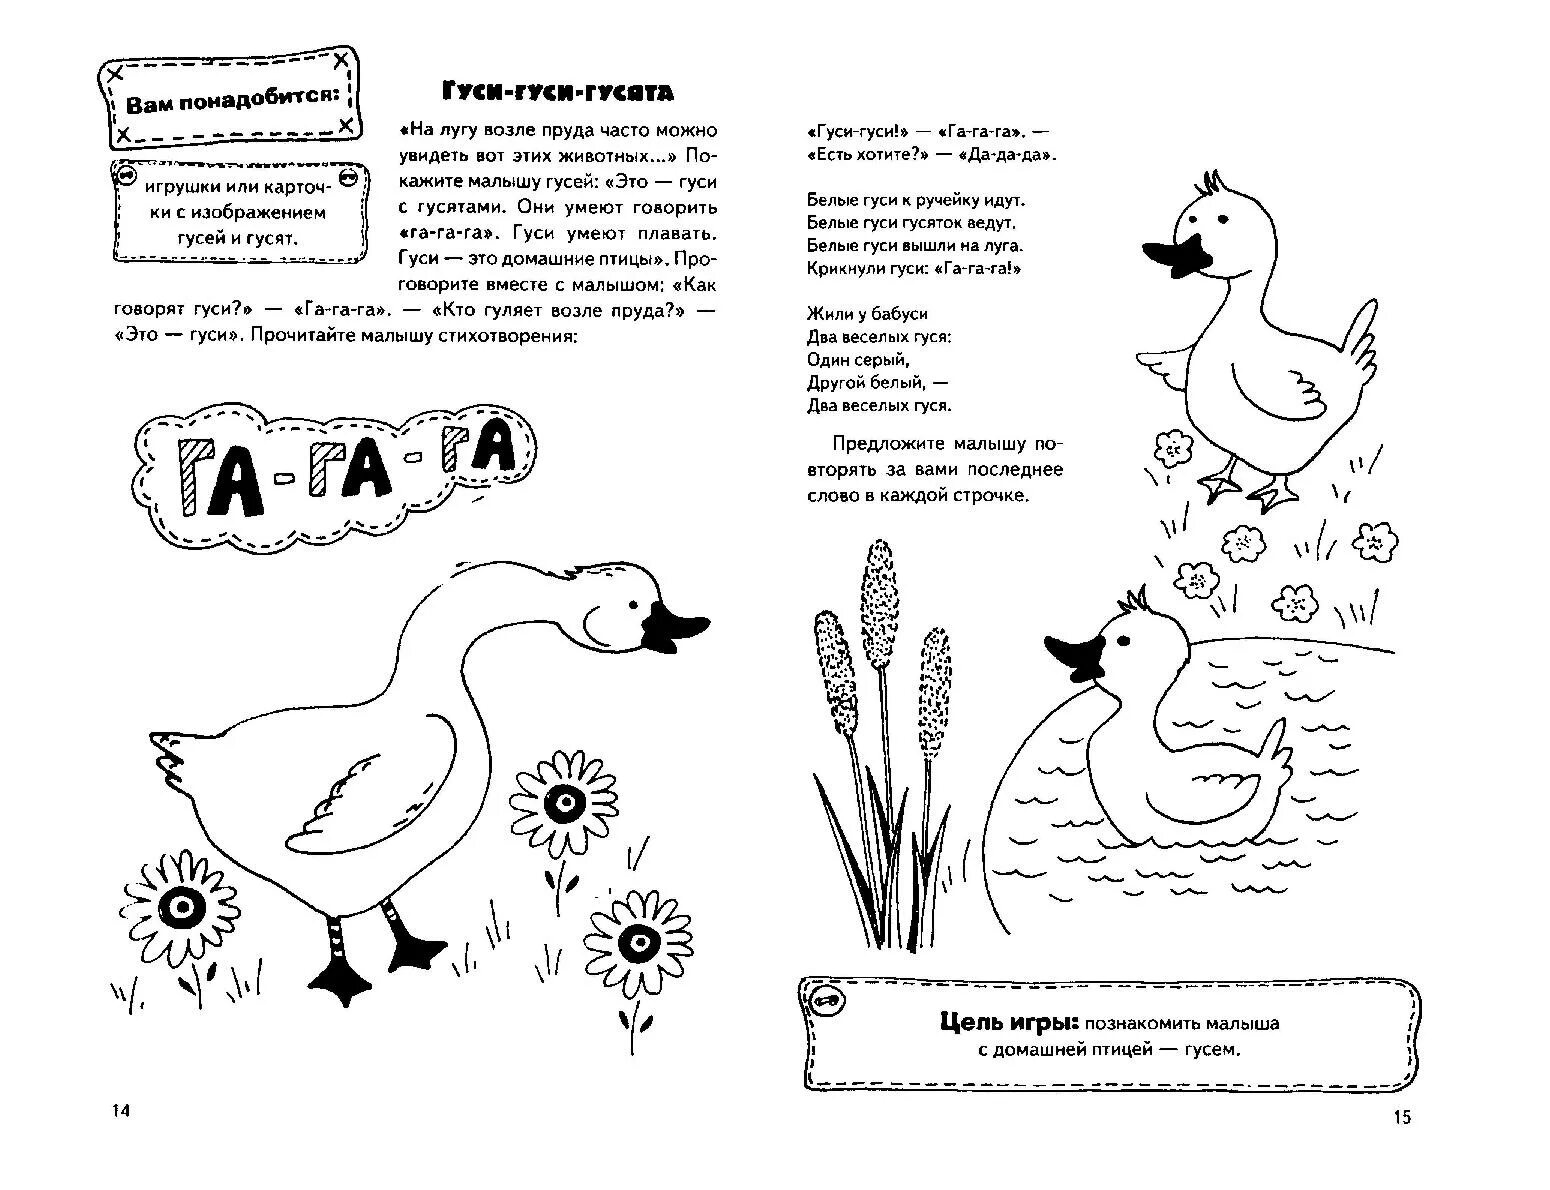 Стихотворение про гуся. Стих про гуся для детей. Стишок про гуся для детей. Загадка про гусенка для детей. Читать про гуся